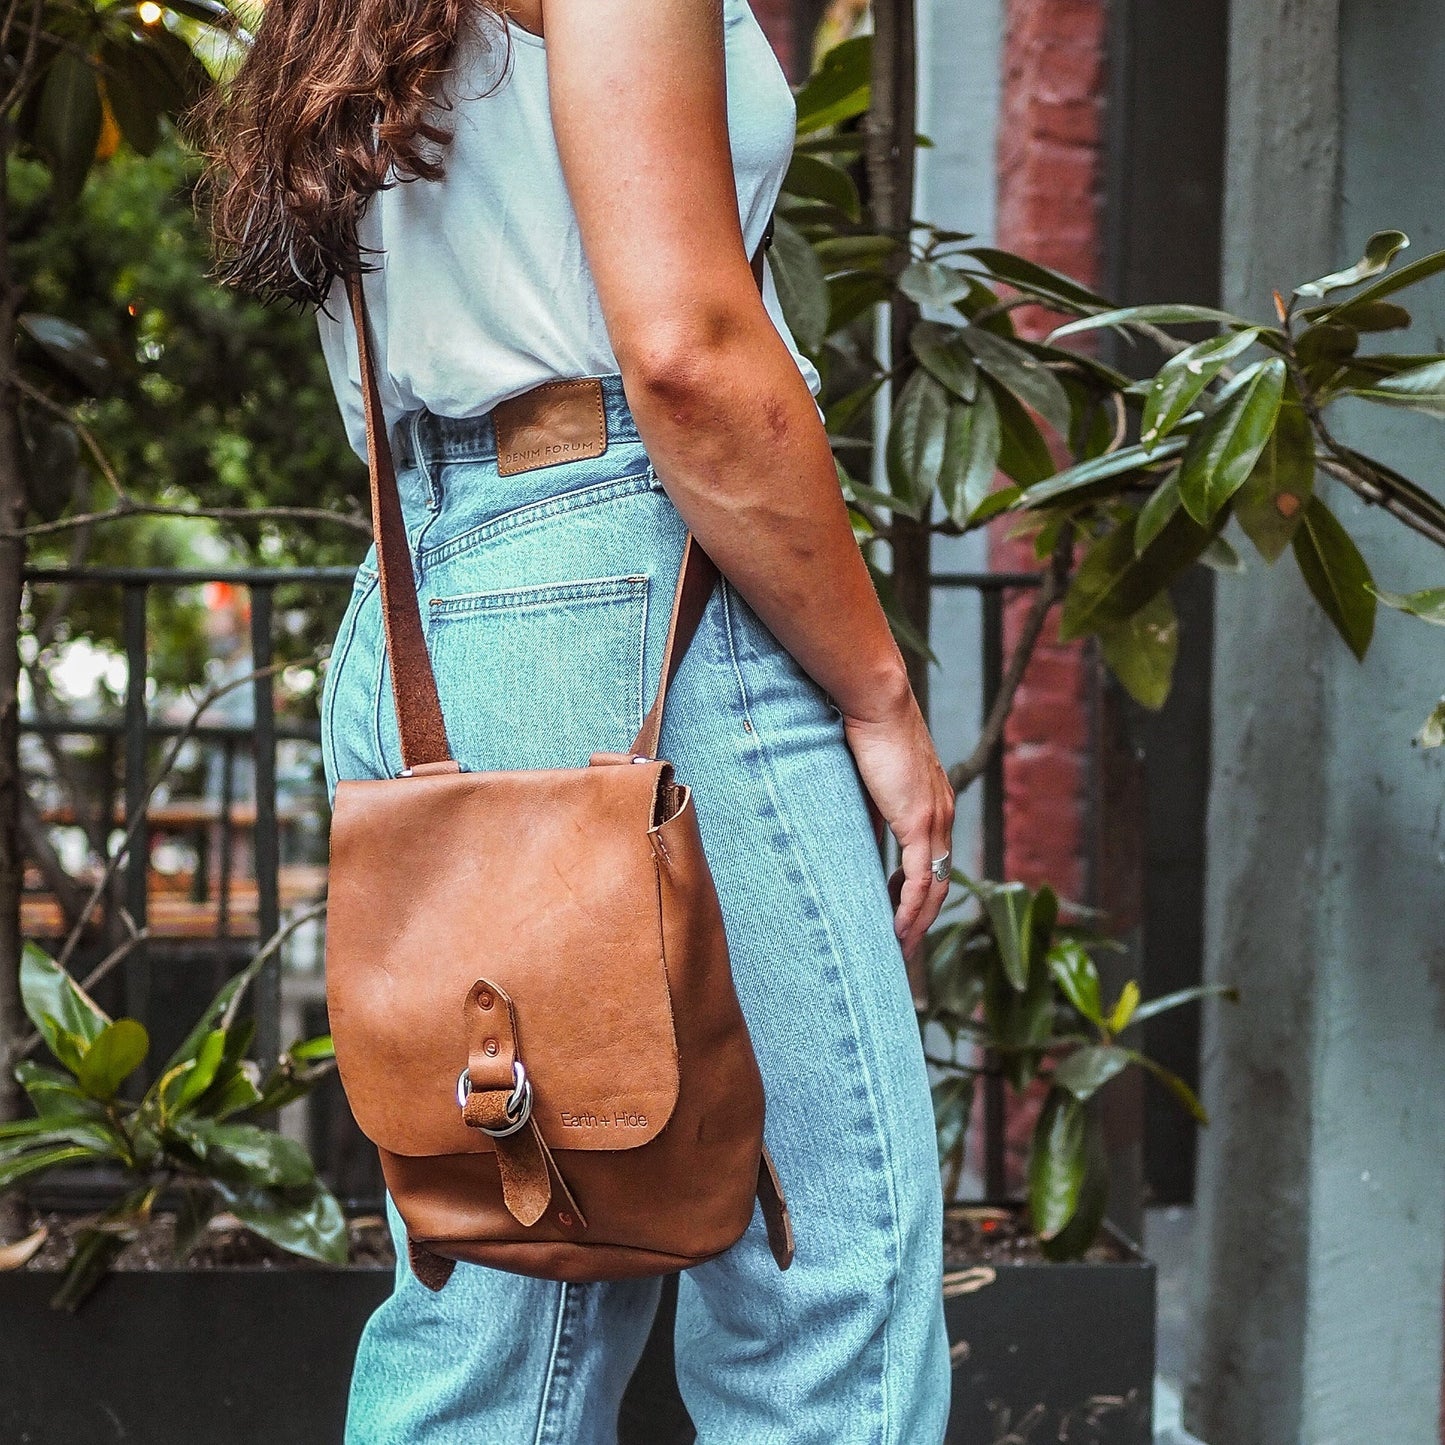 Sarah-Belle Mini Backpack - Wholesale